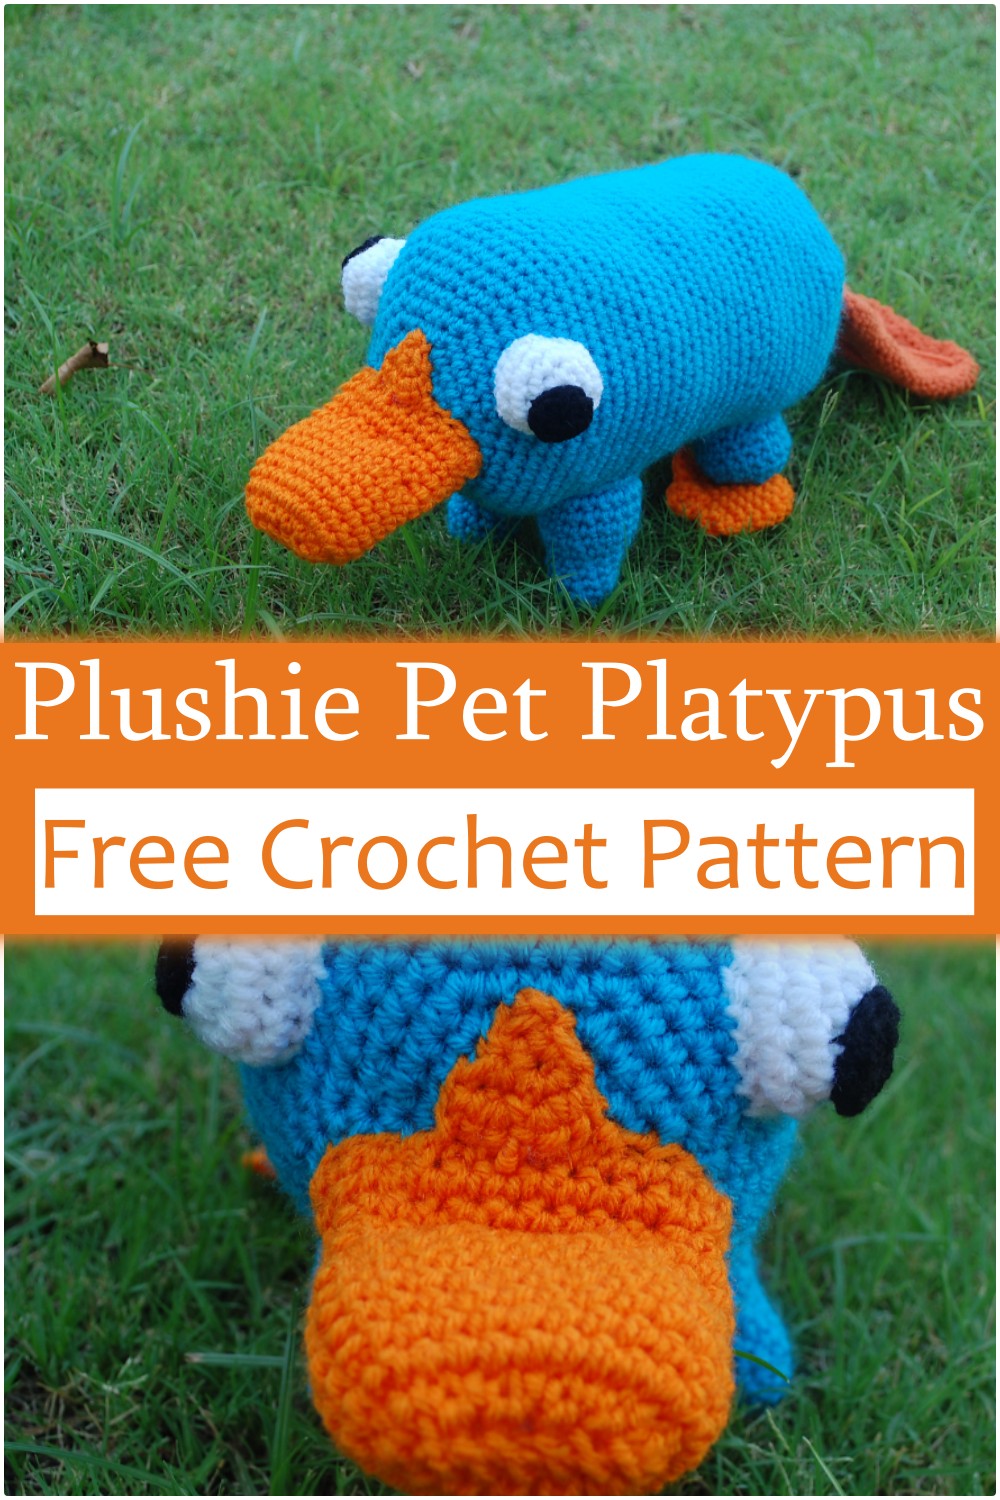 Plushie Crochet Platypus Free Pattern